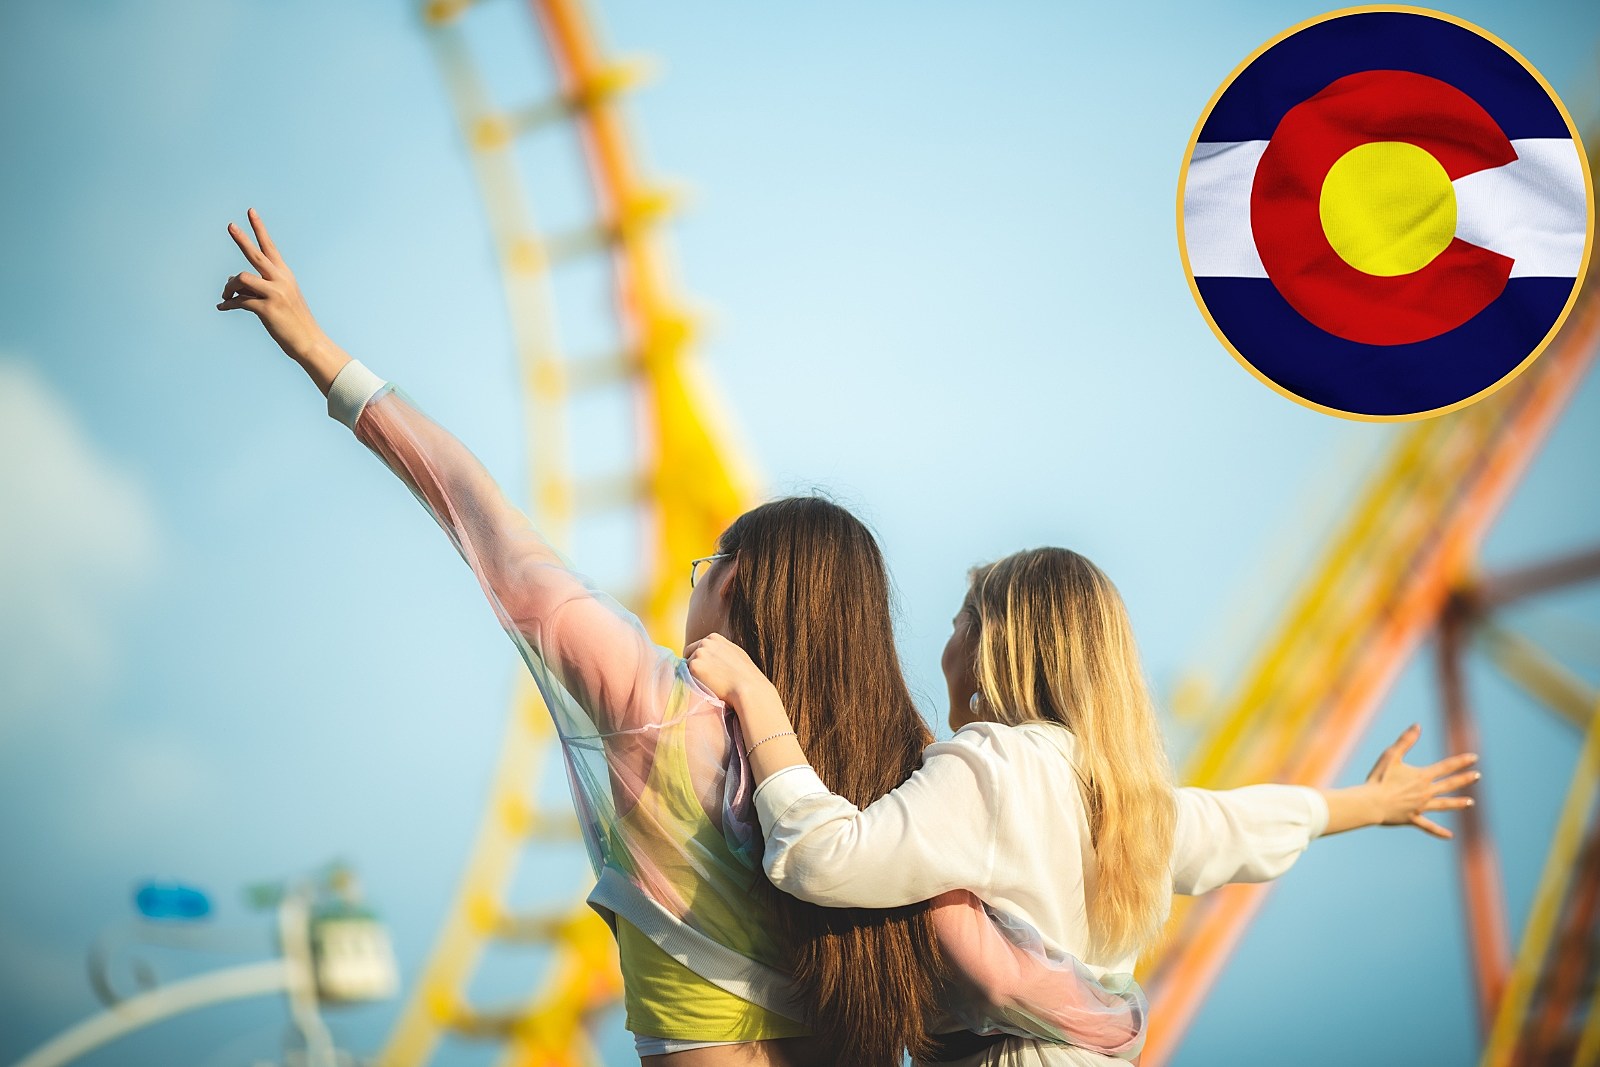 17 of the Worst Names for a Colorado Theme Park